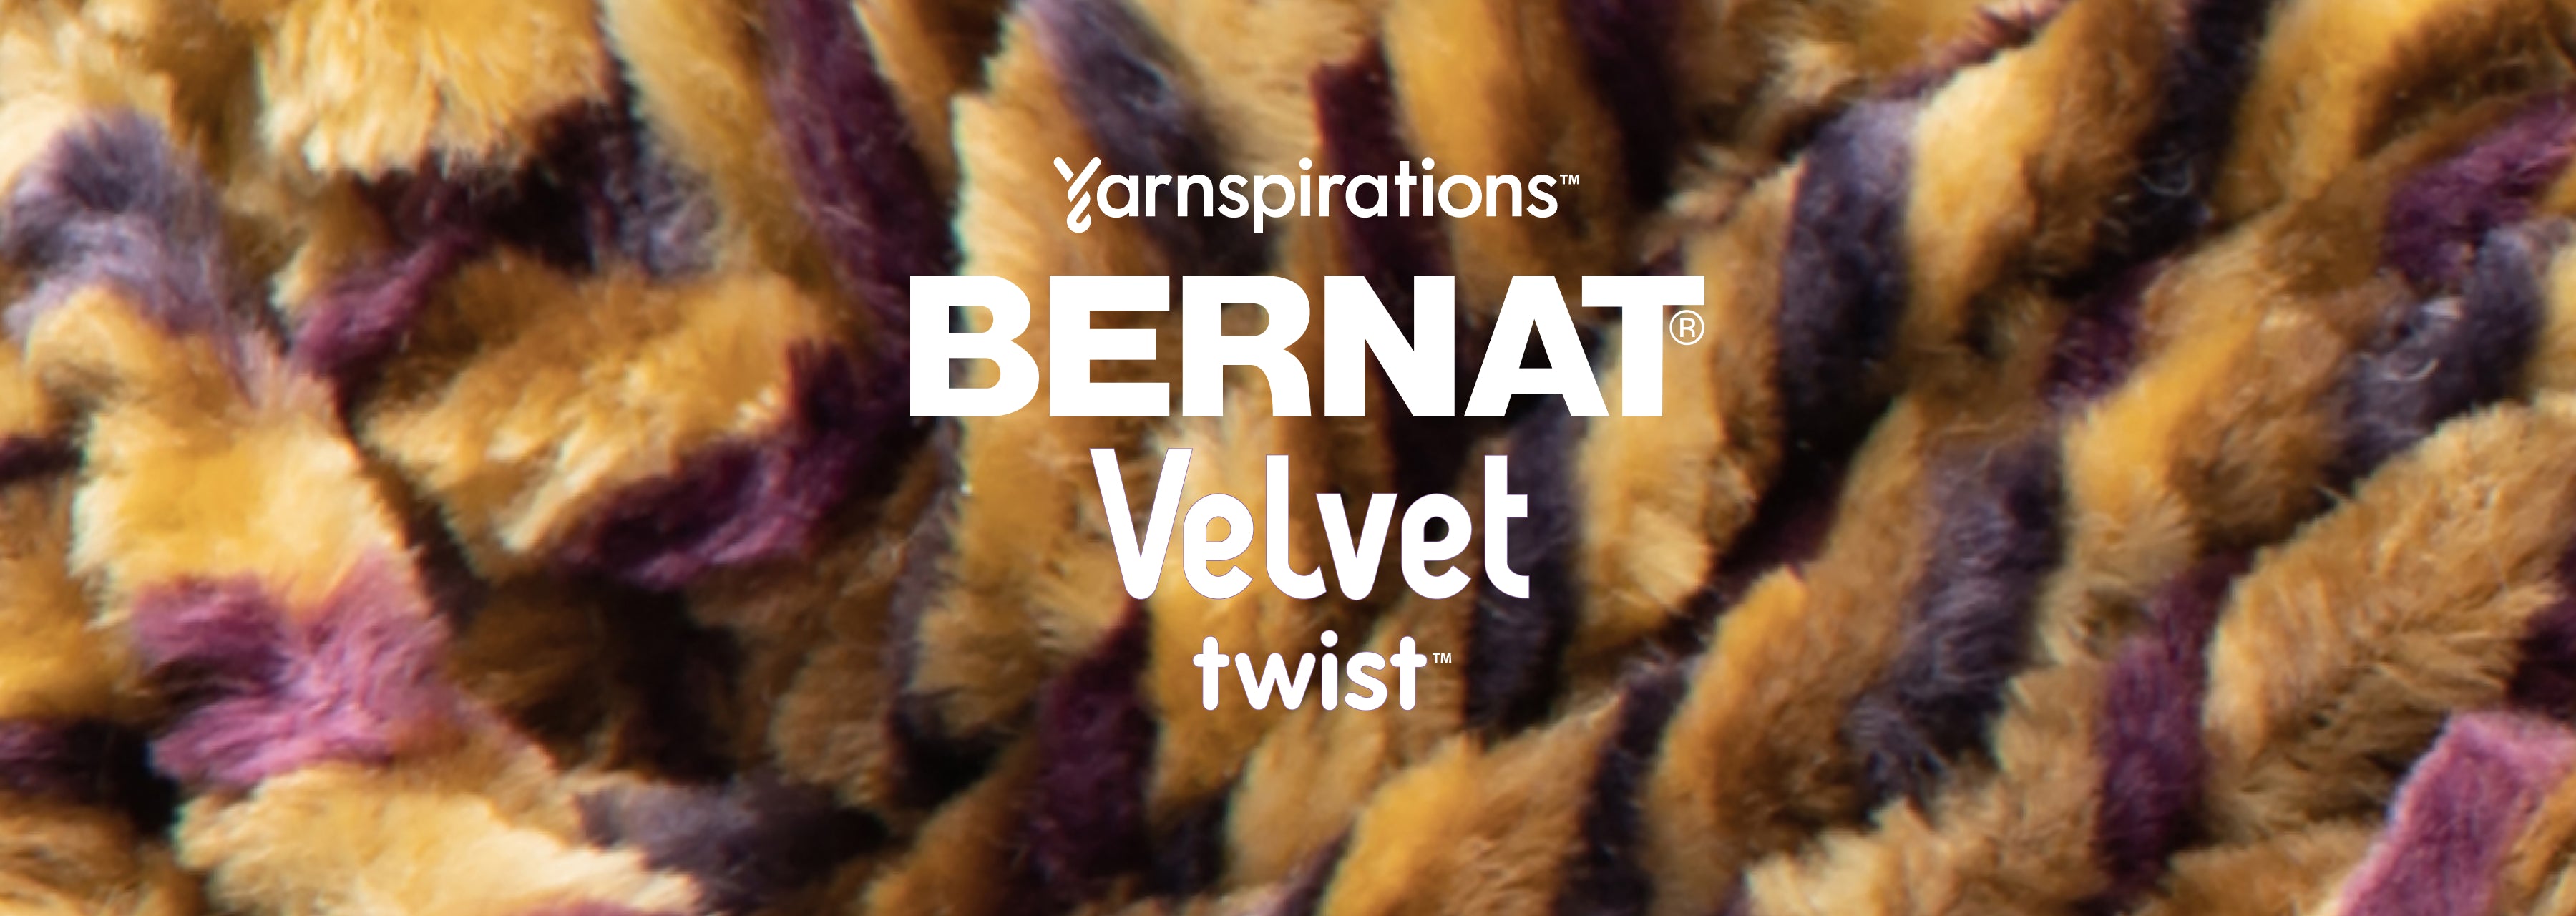 Introducing Bernat Velvet Twist